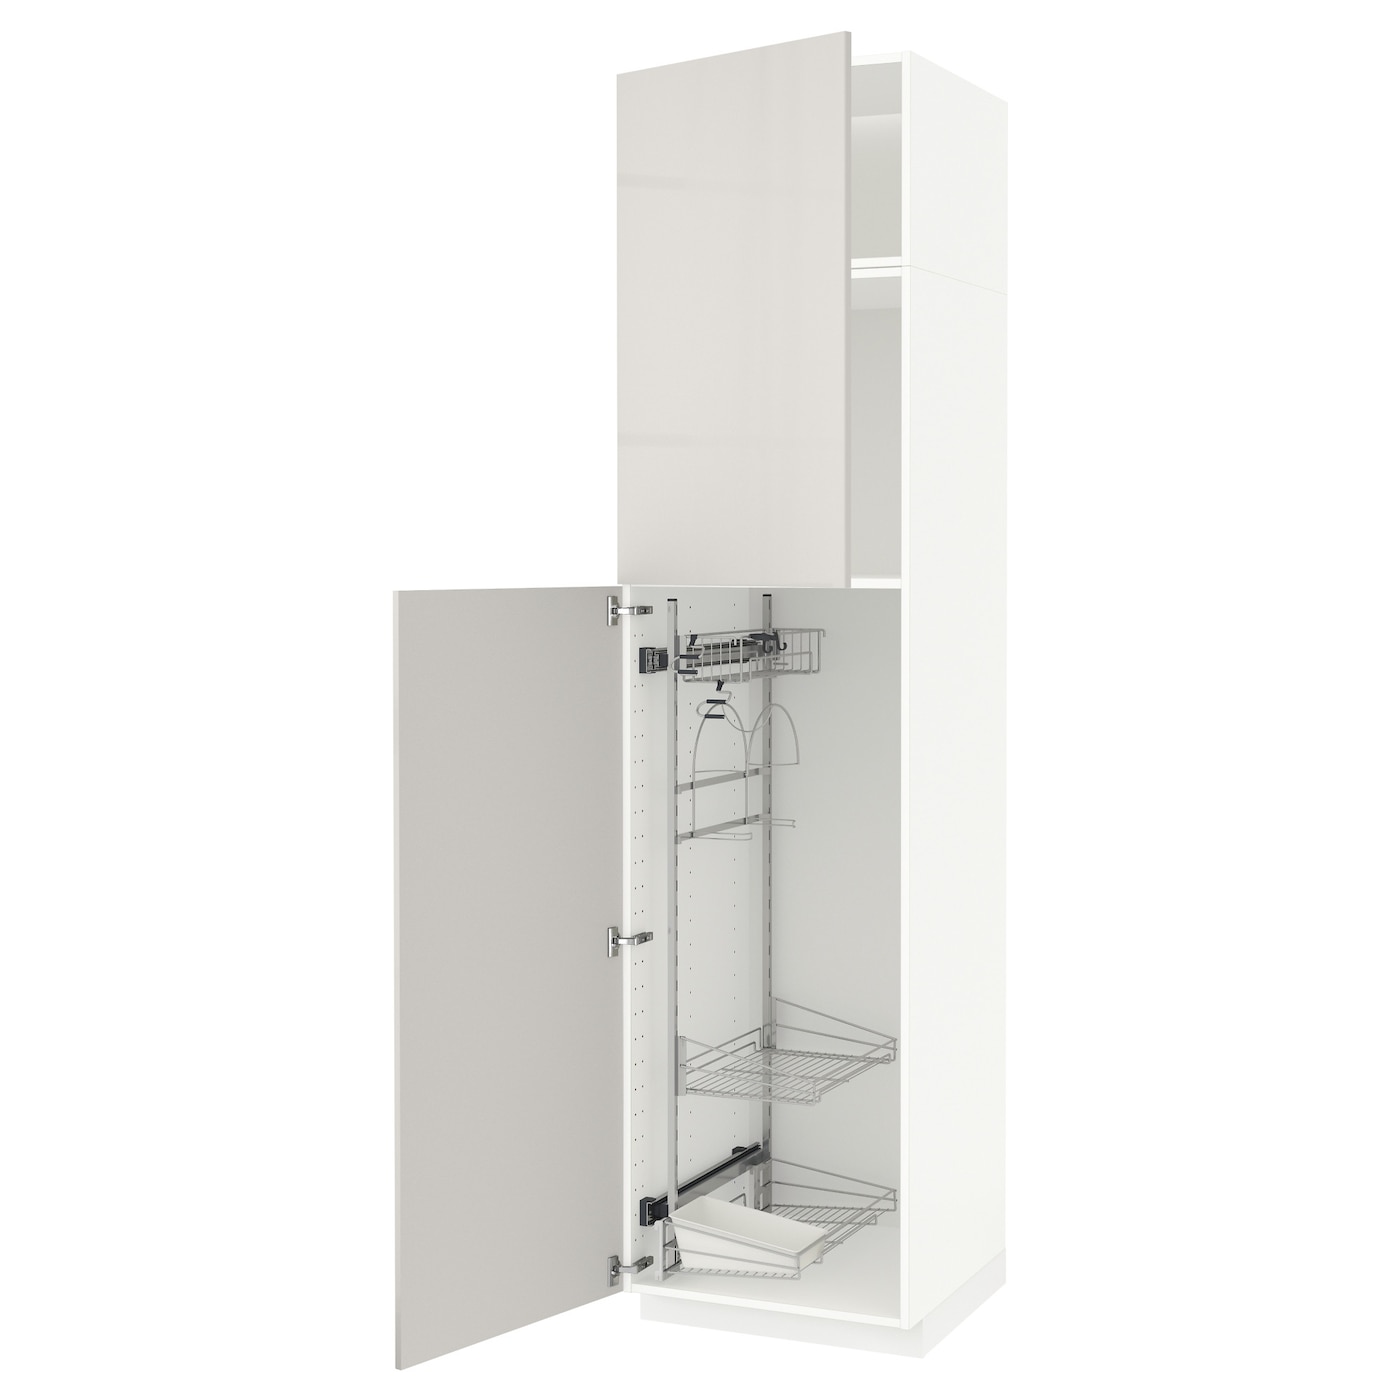 Высокий шкаф/бытовой - IKEA METOD/МЕТОД ИКЕА, 240х60х60 см, белый/серый глянцевый